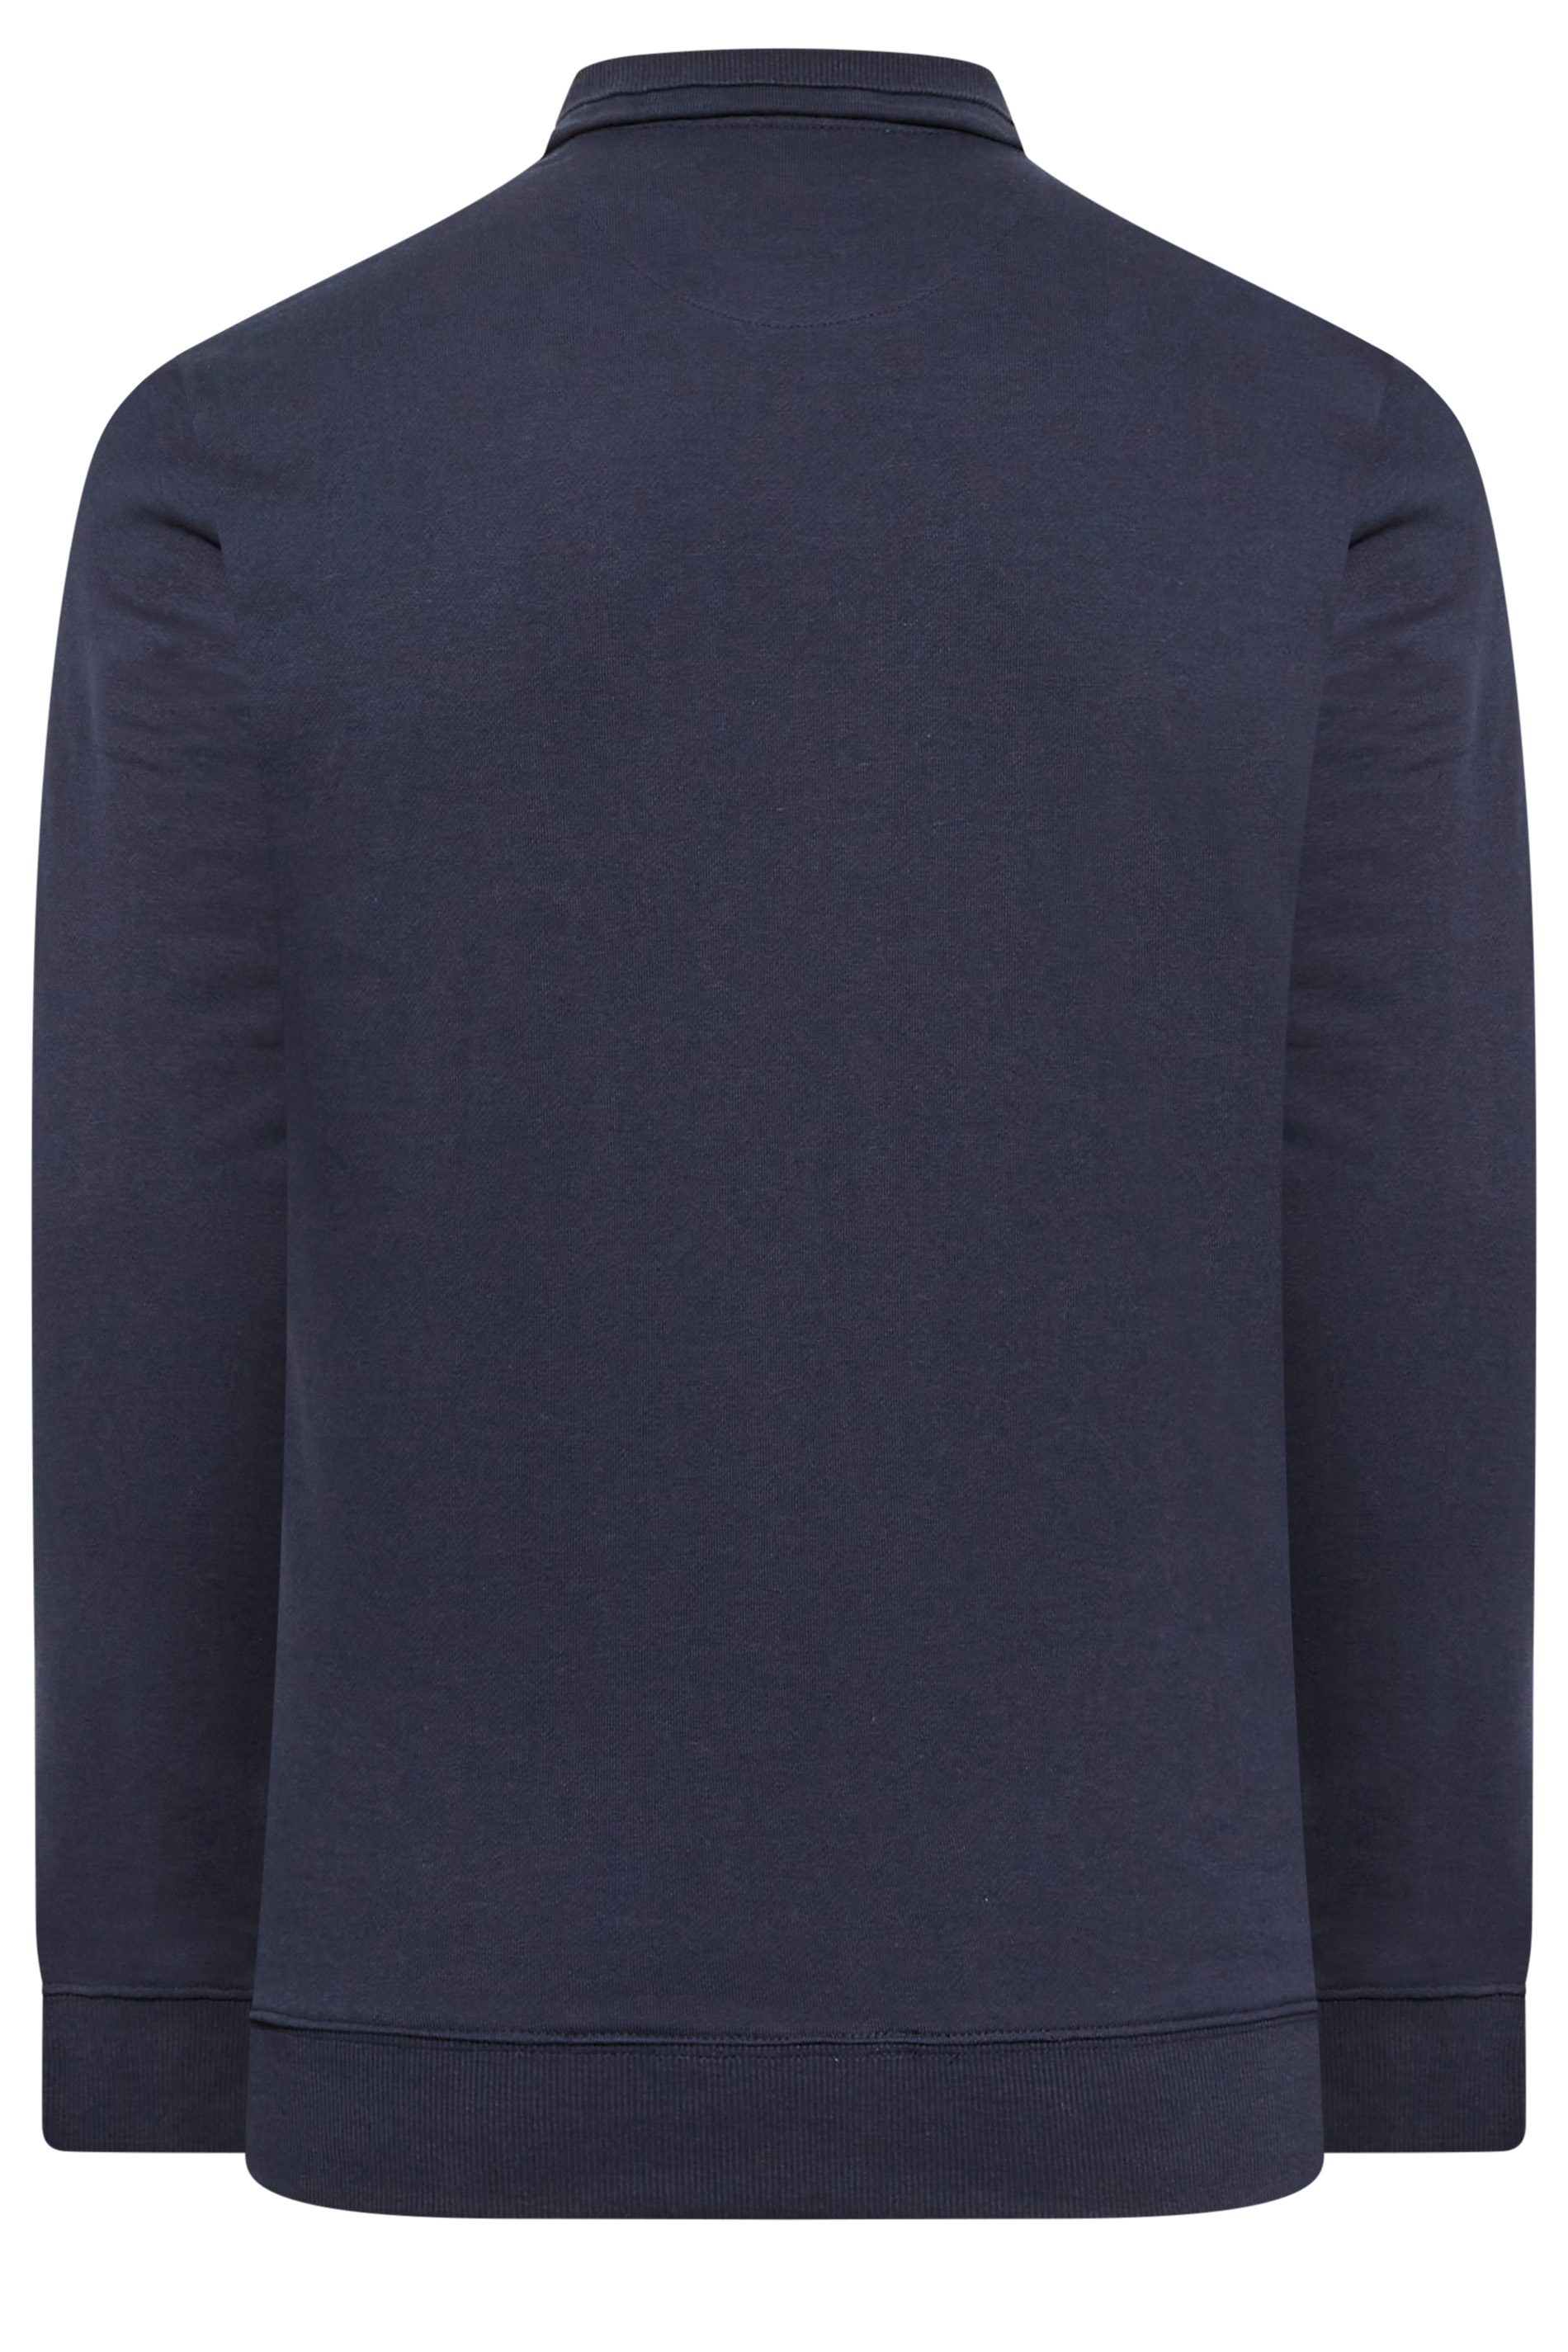 FARAH Big & Tall Navy Blue Quarter Zip Sweatshirt | BadRhino 1